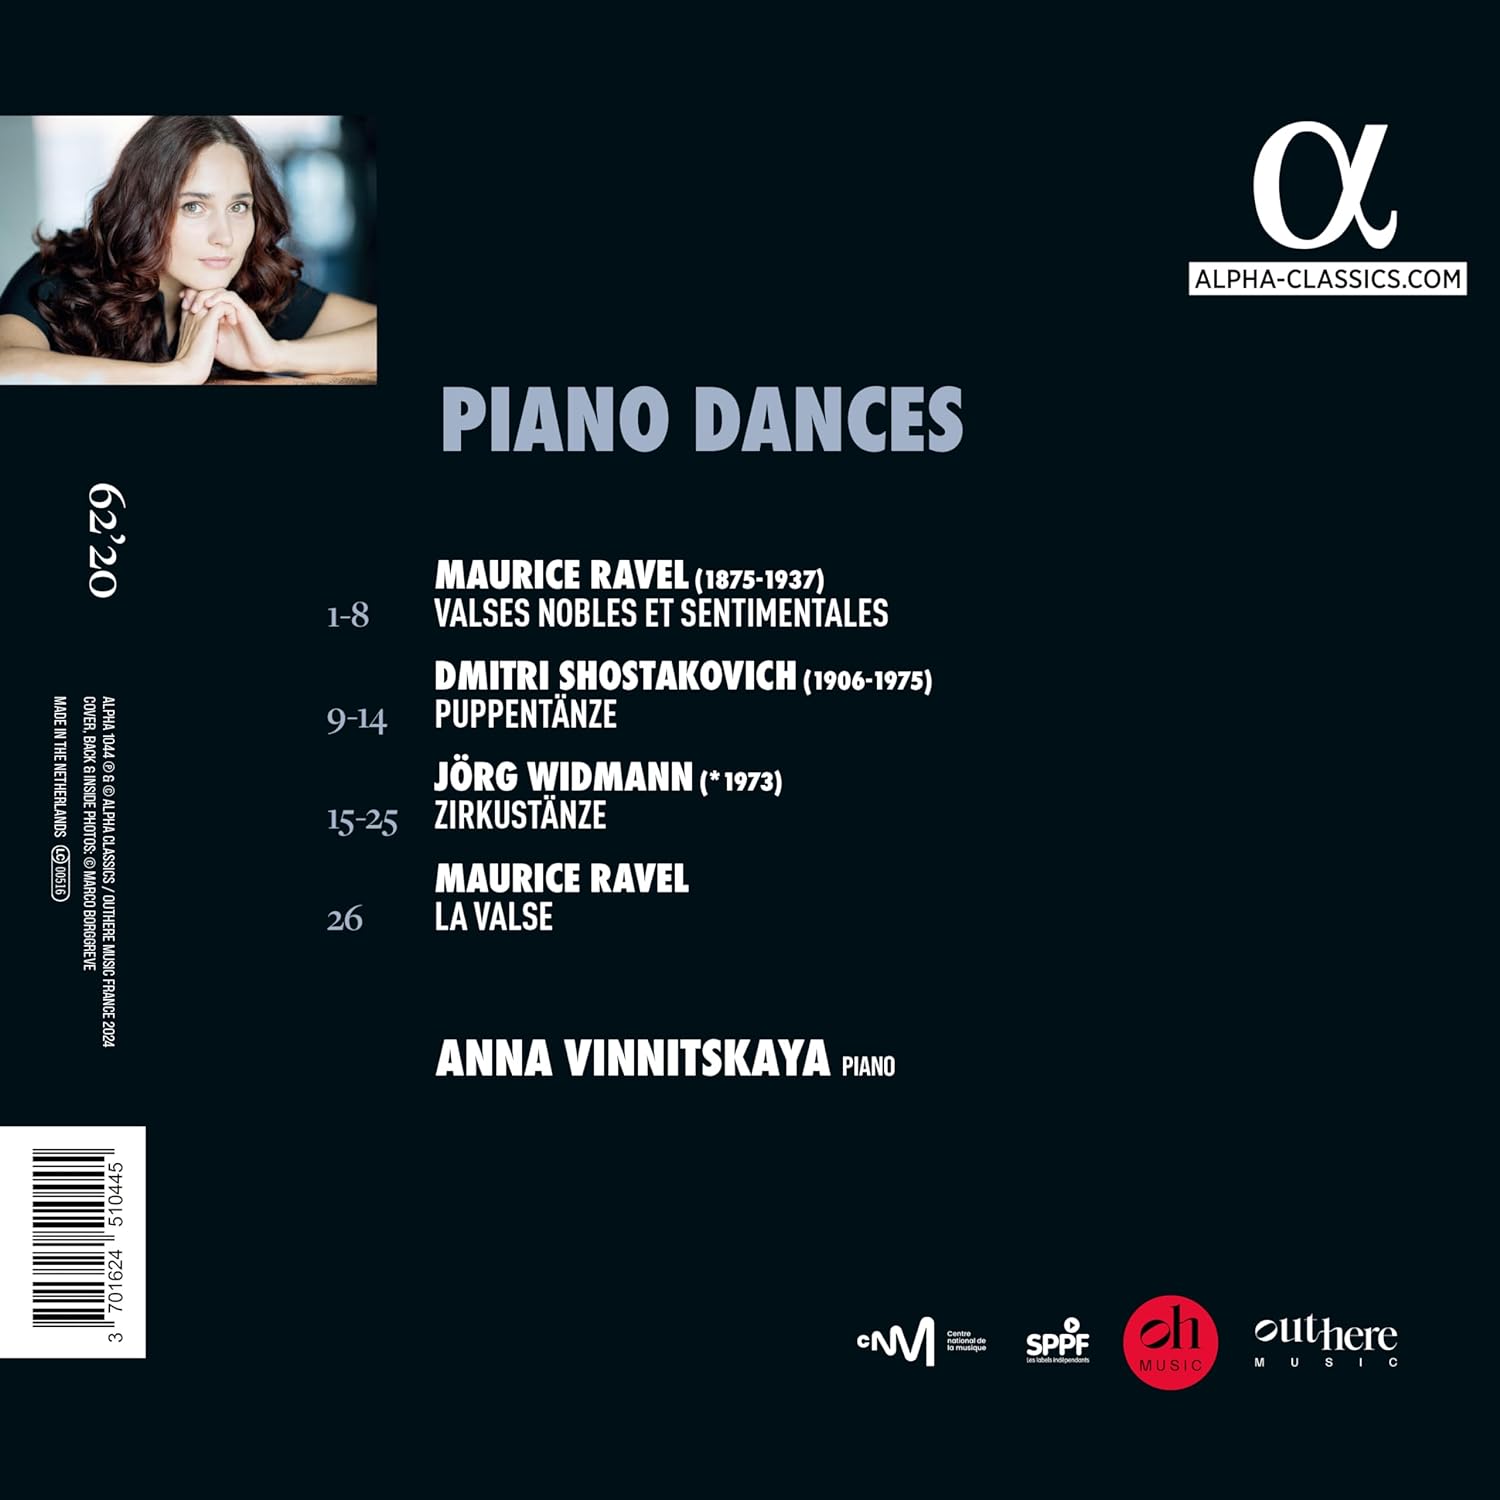 Anna Vinnitskaya 피아노 무곡 - 라벨, 쇼스타코비치, 비트만 (Piano Dances)